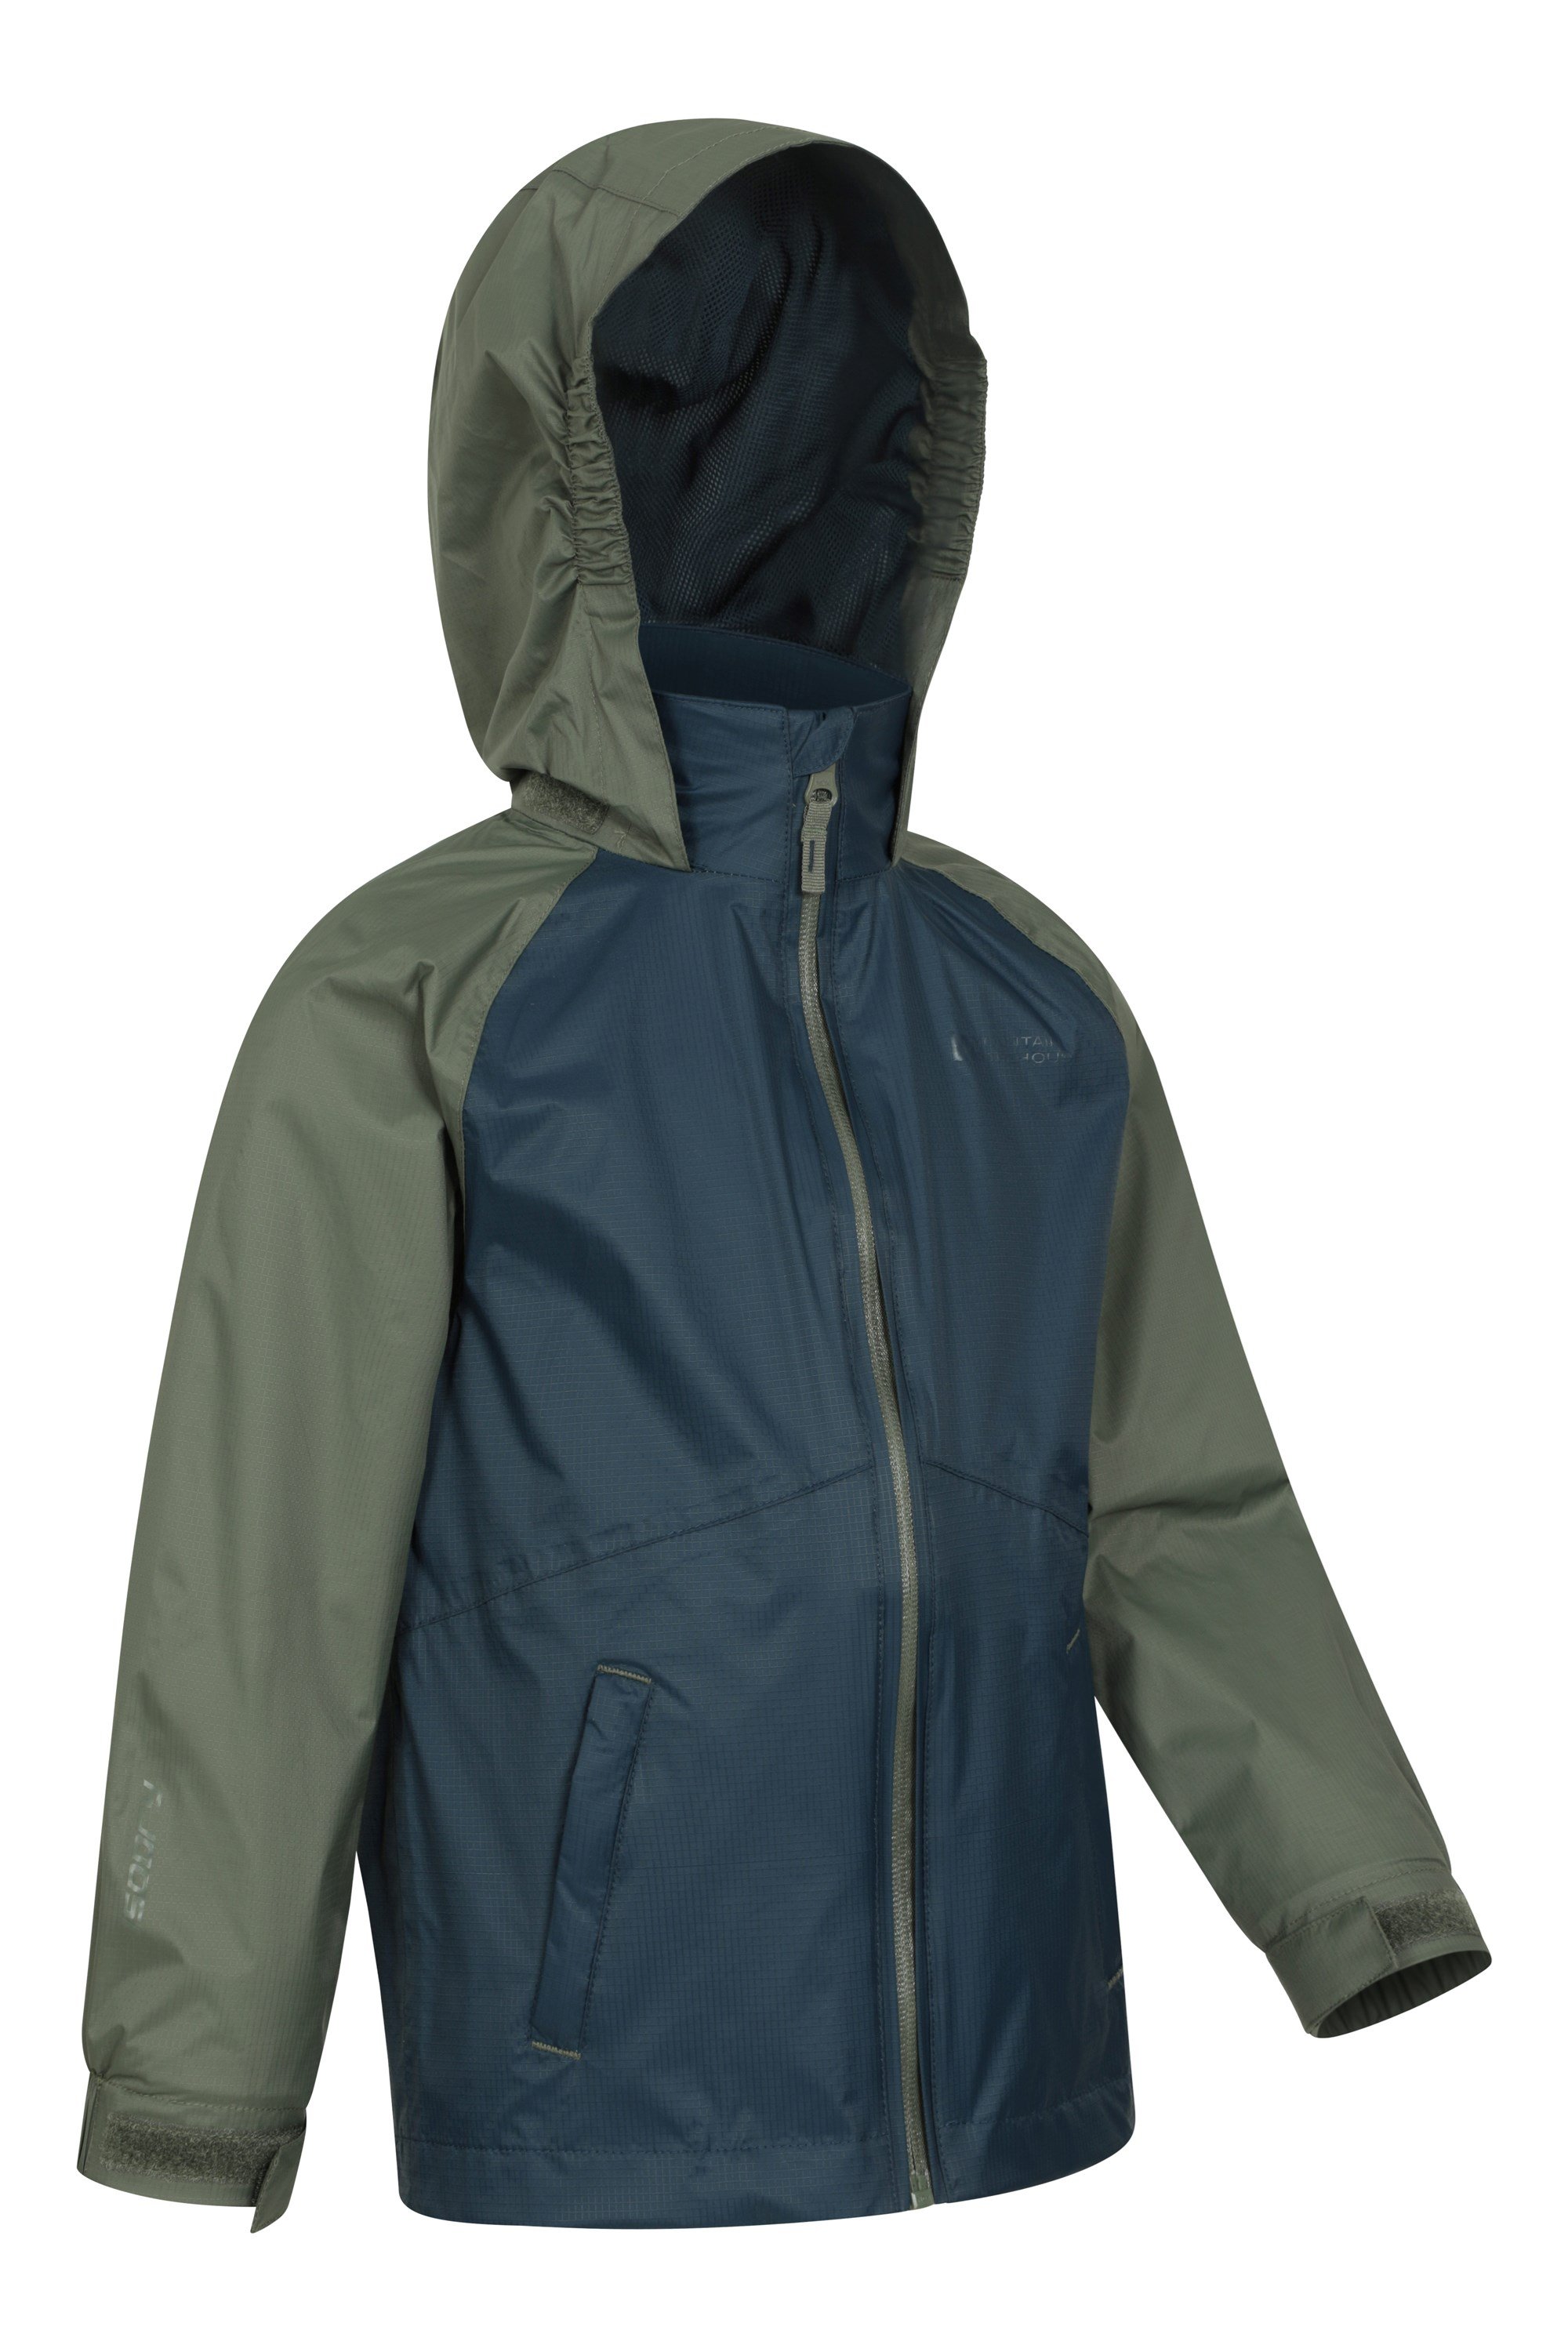 Mountain Warehouse BRAND NEW • Mountain Warehouse • Boys Waterproof Coat Jacket 13 Years Blue 5052776354622 